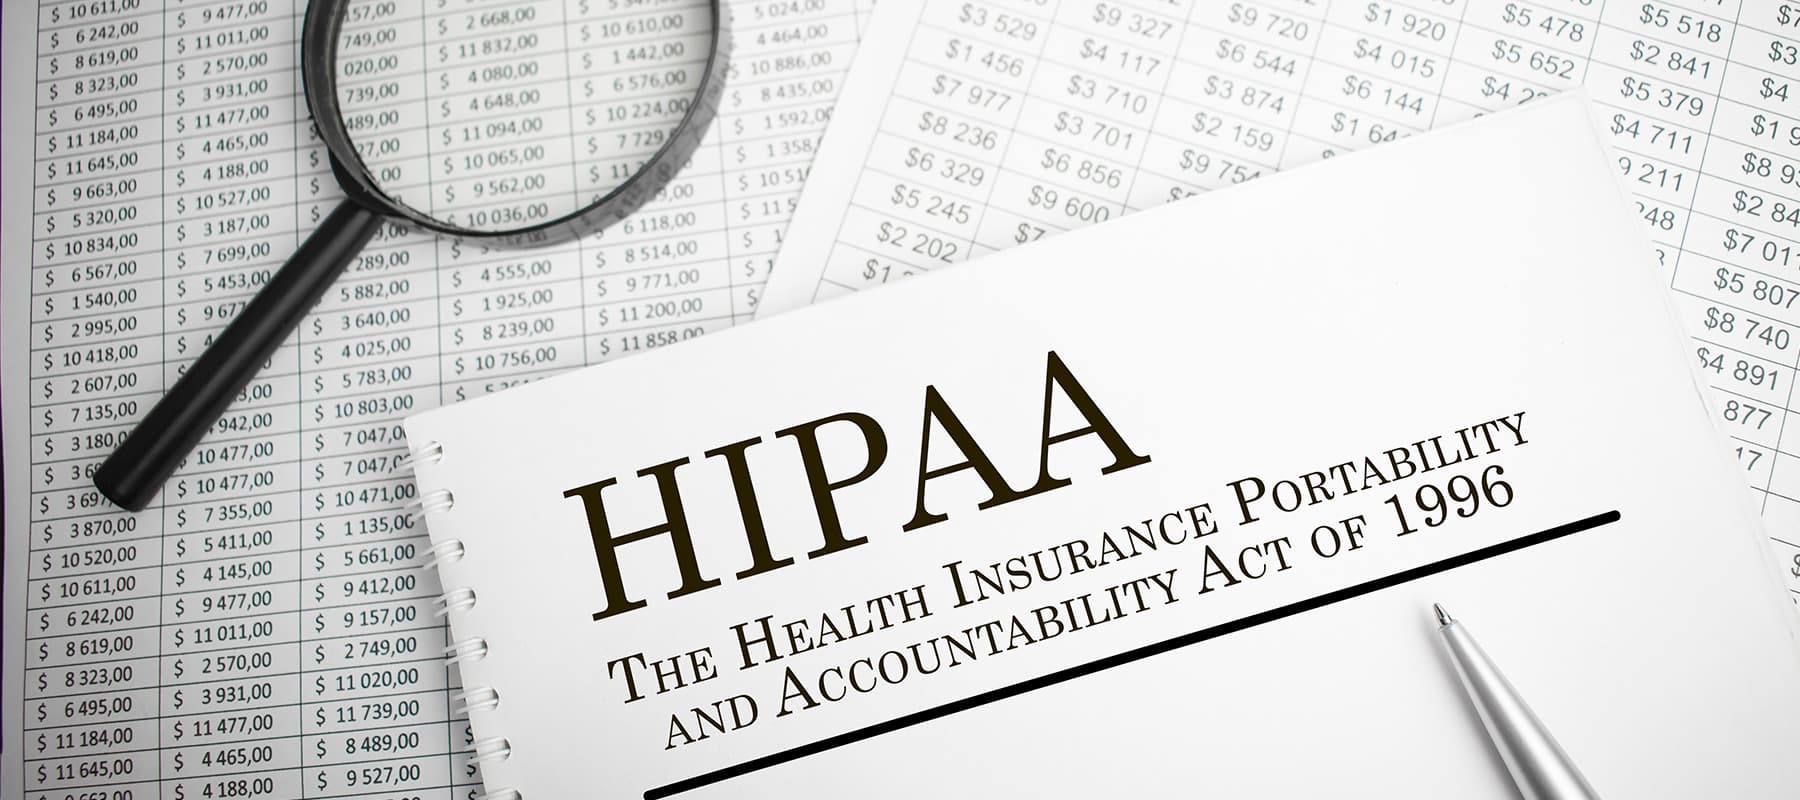 HIPAA Authorization Forms